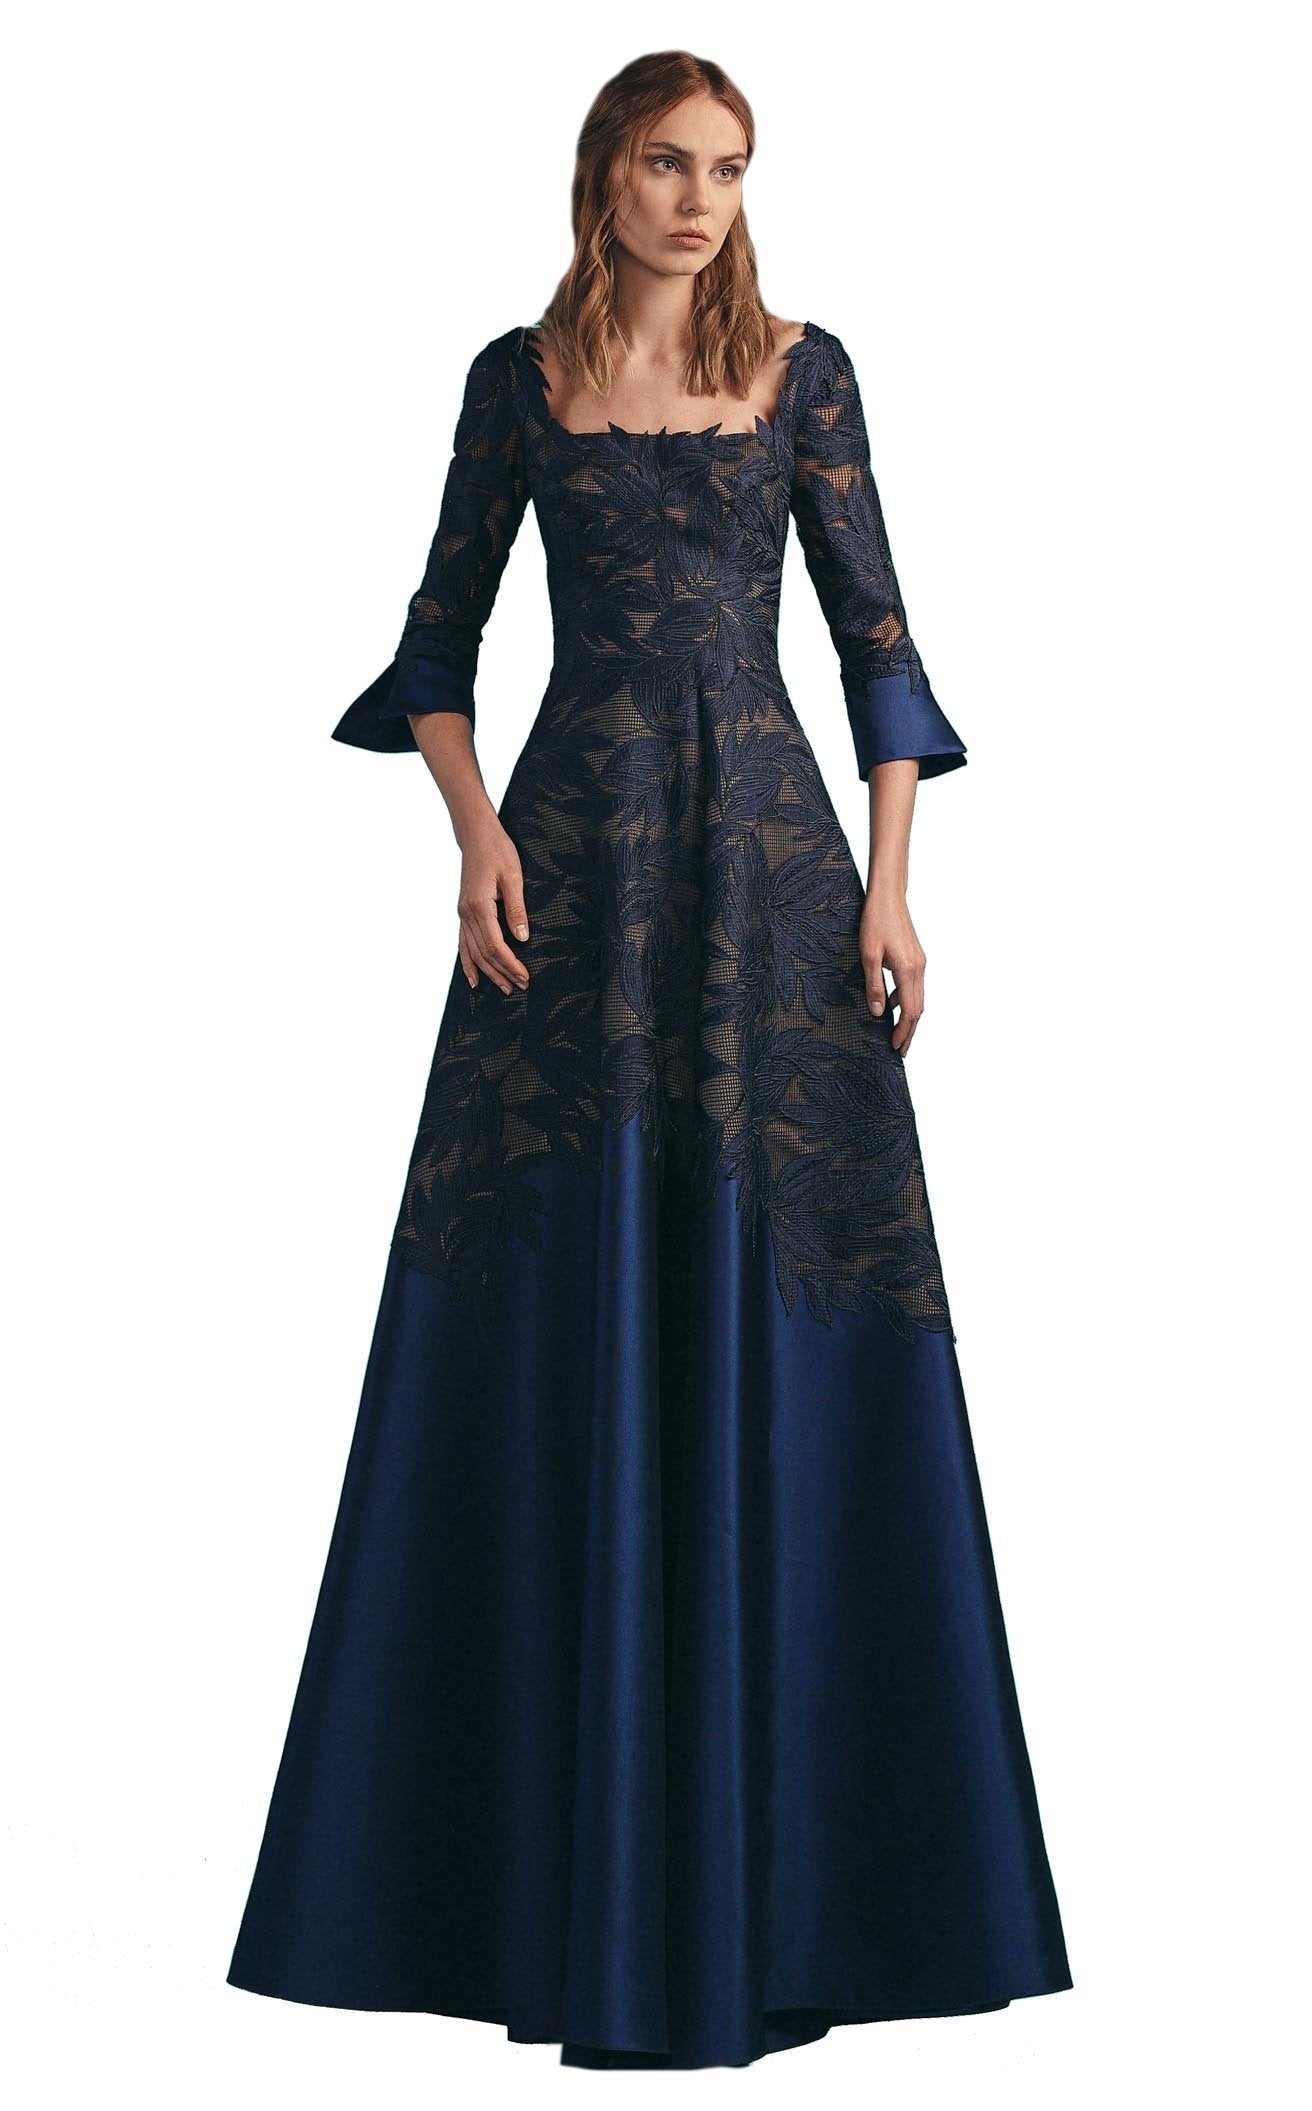 Edition Gemy Maalouf Dresses | Shop Formal & Evening Gowns – NewYorkDress